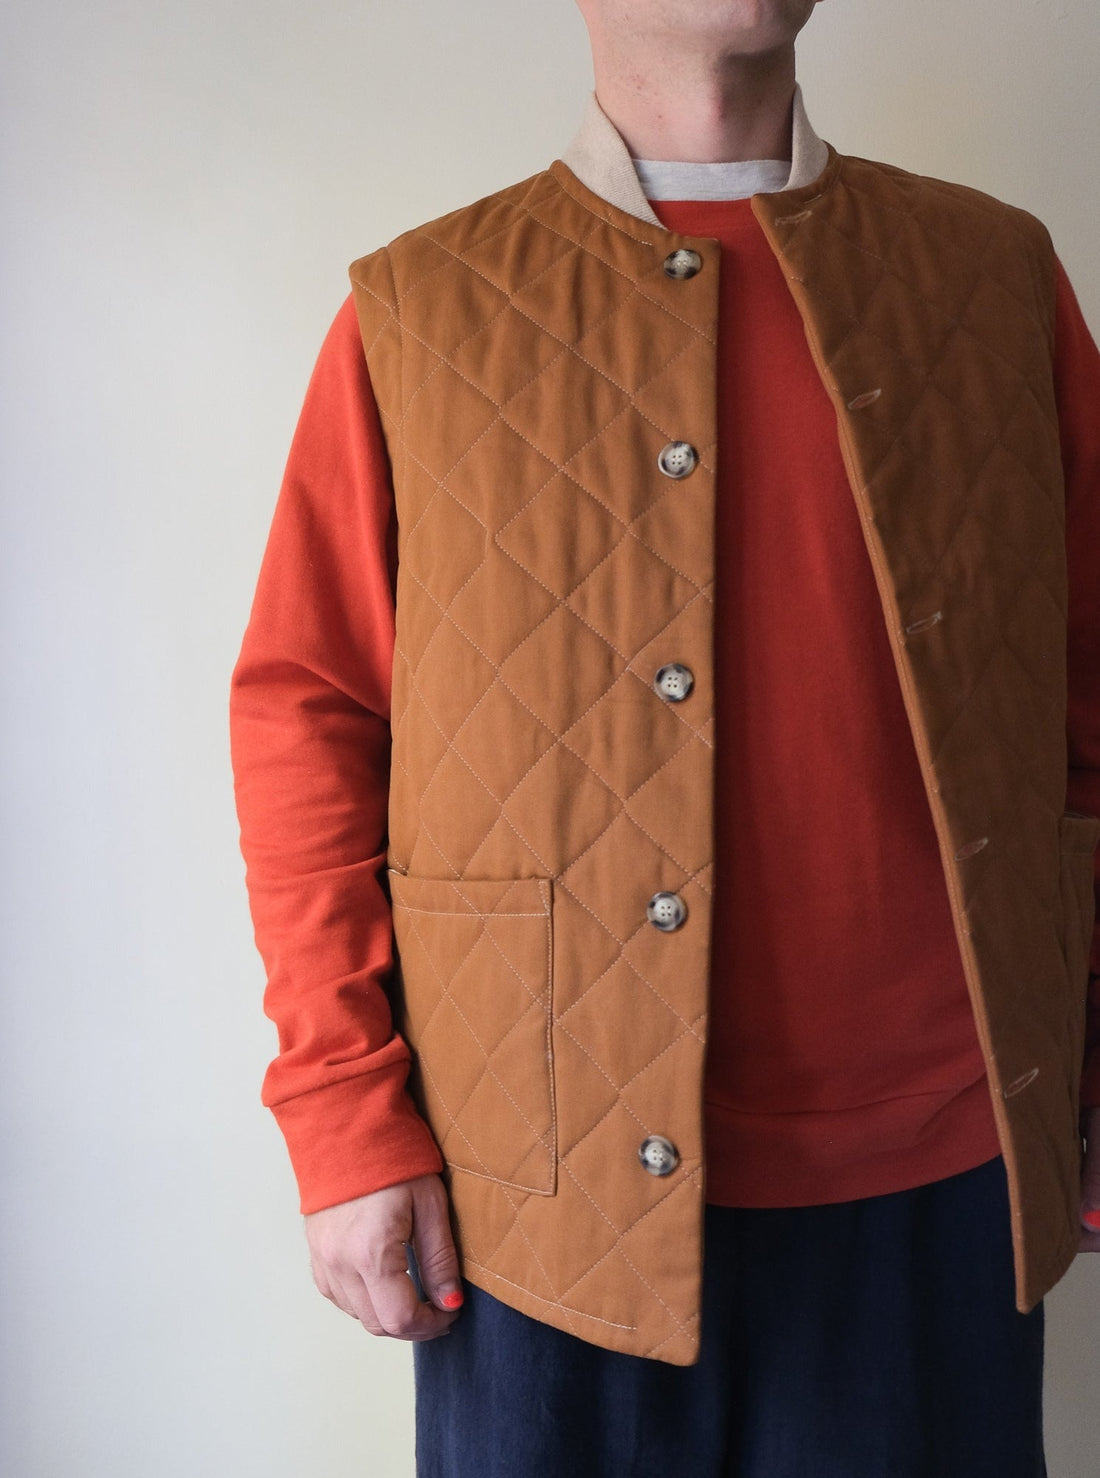 Sleeveless quilted jacket No5710u